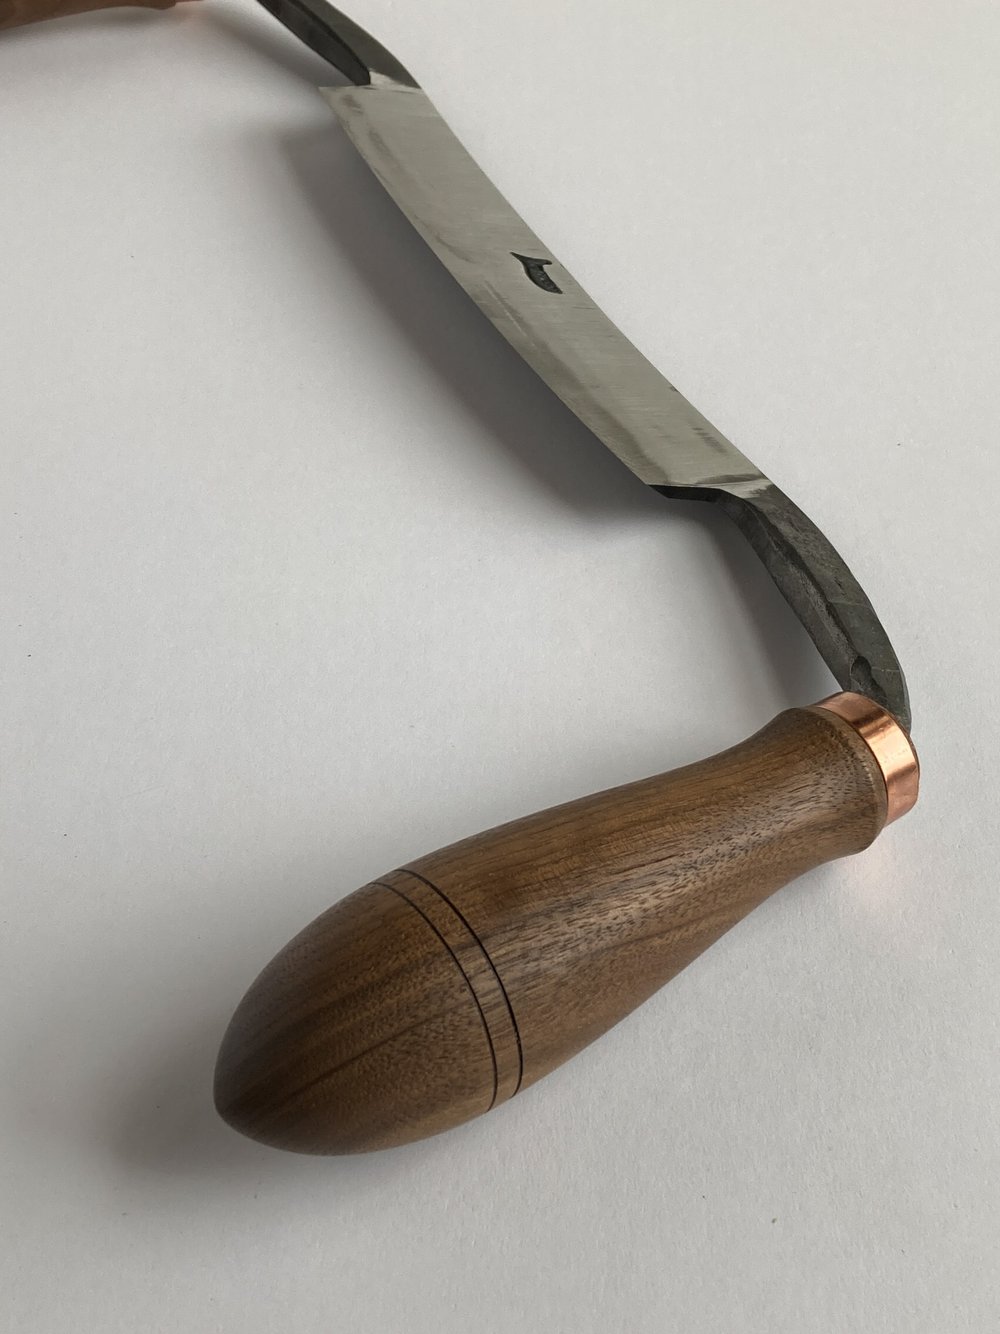 Drawknife №2 - The Spoon Crank